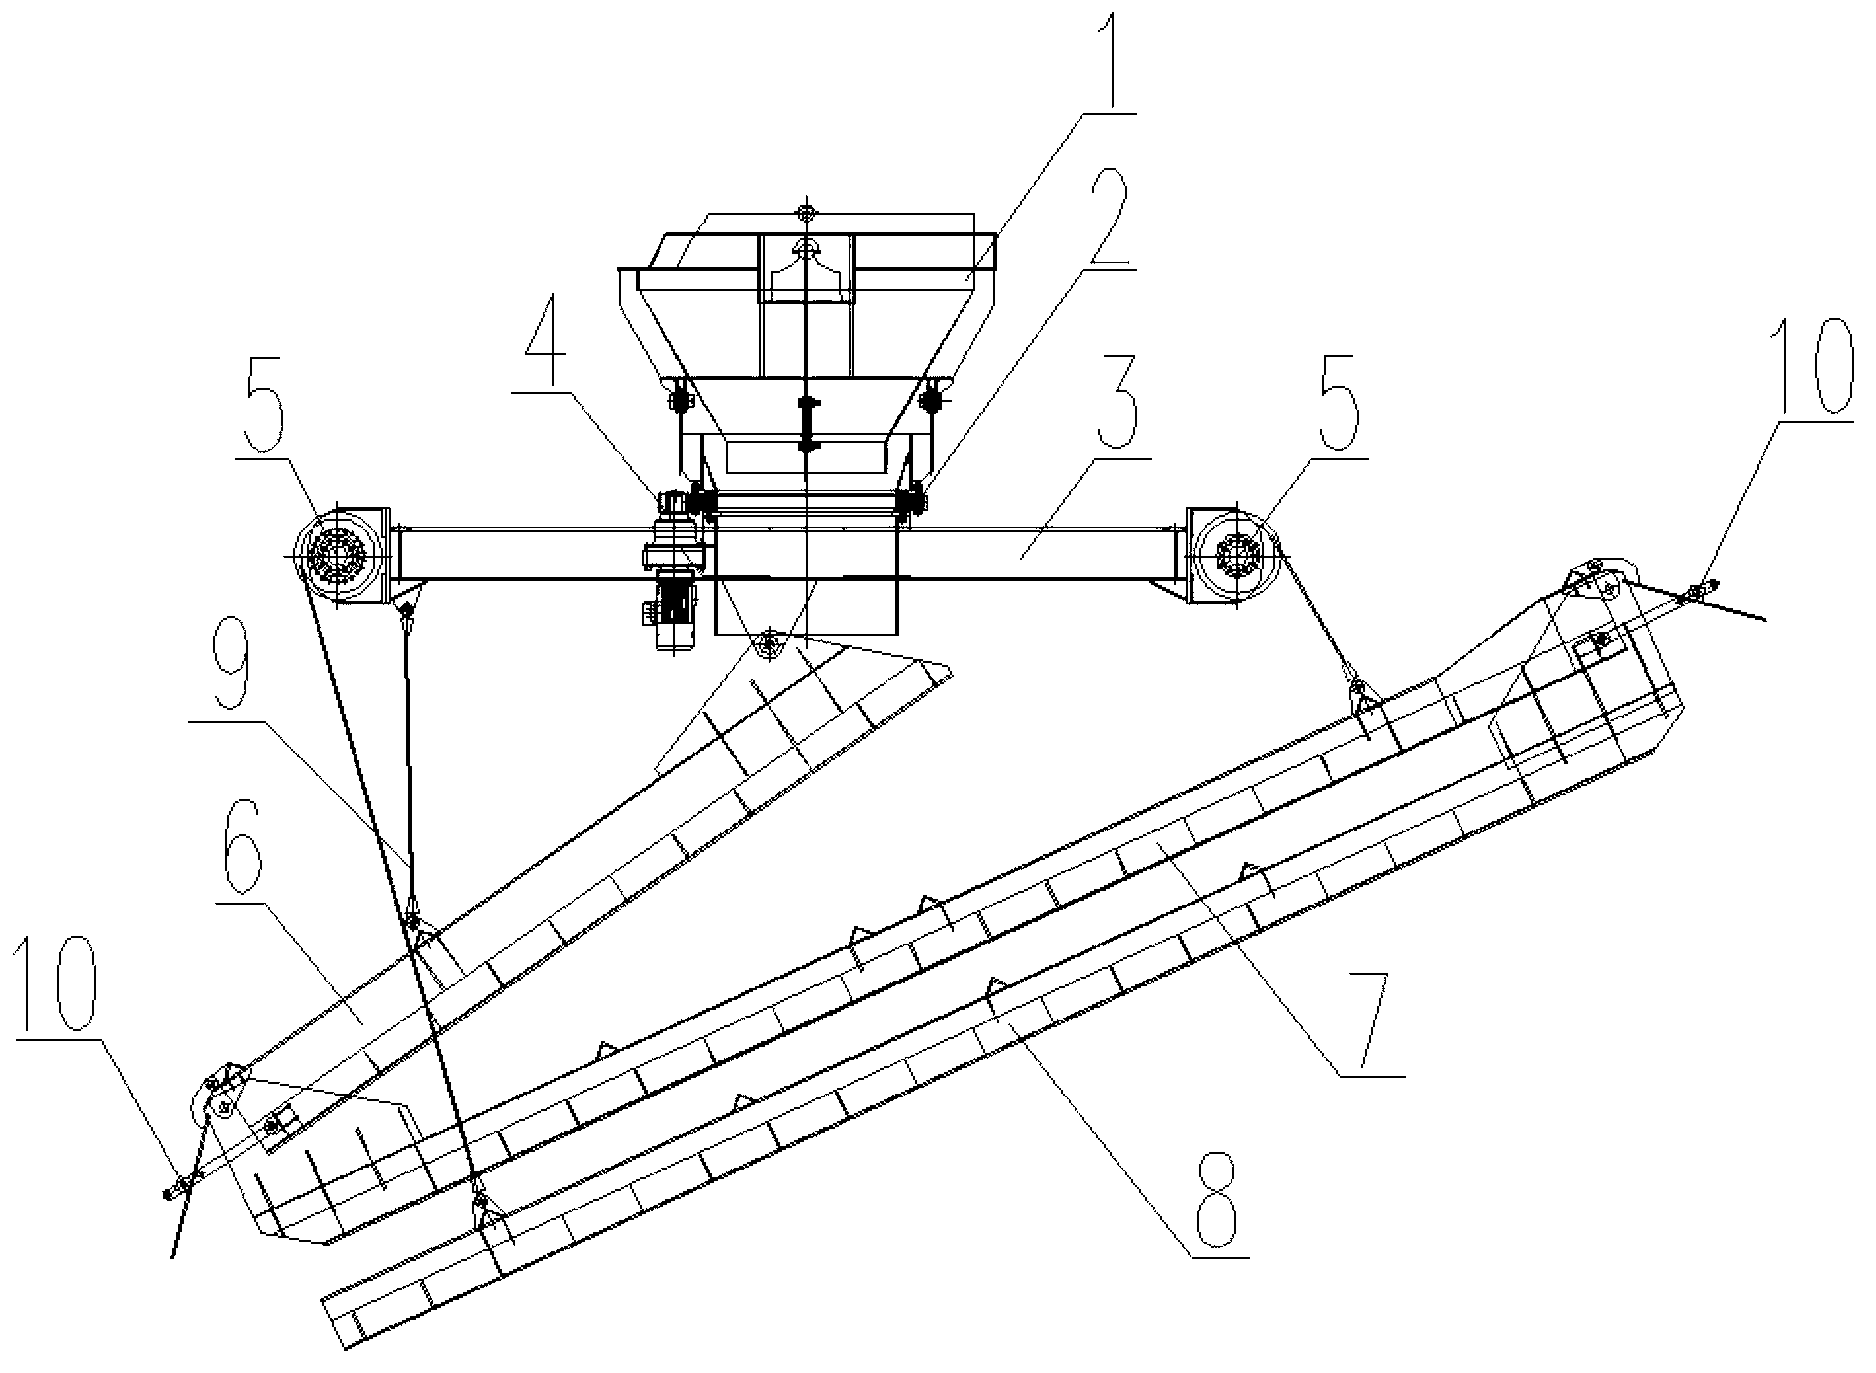 Z-shaped slow-descending chute discharging device